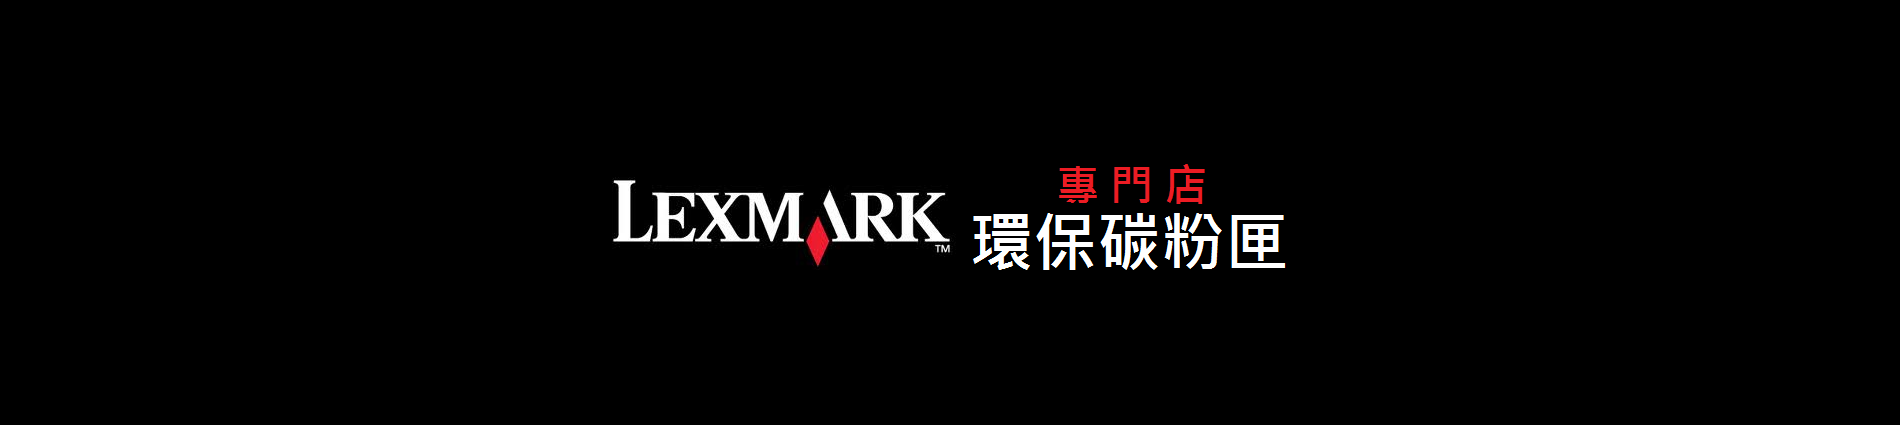 Lexmark 環保碳粉匣 專賣店 專門店